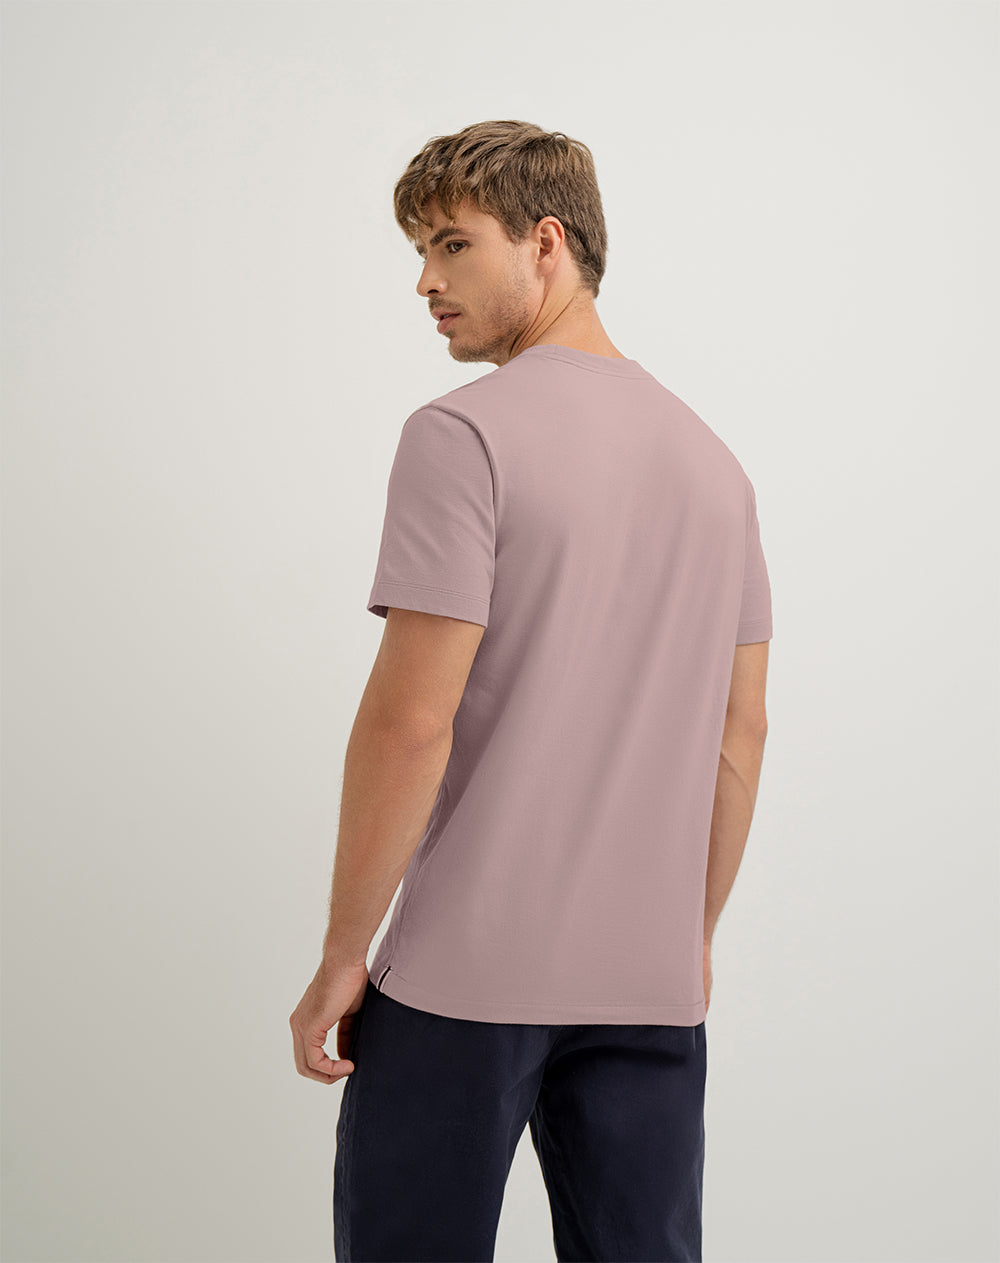 Camiseta regular fit manga corta palo de rosa